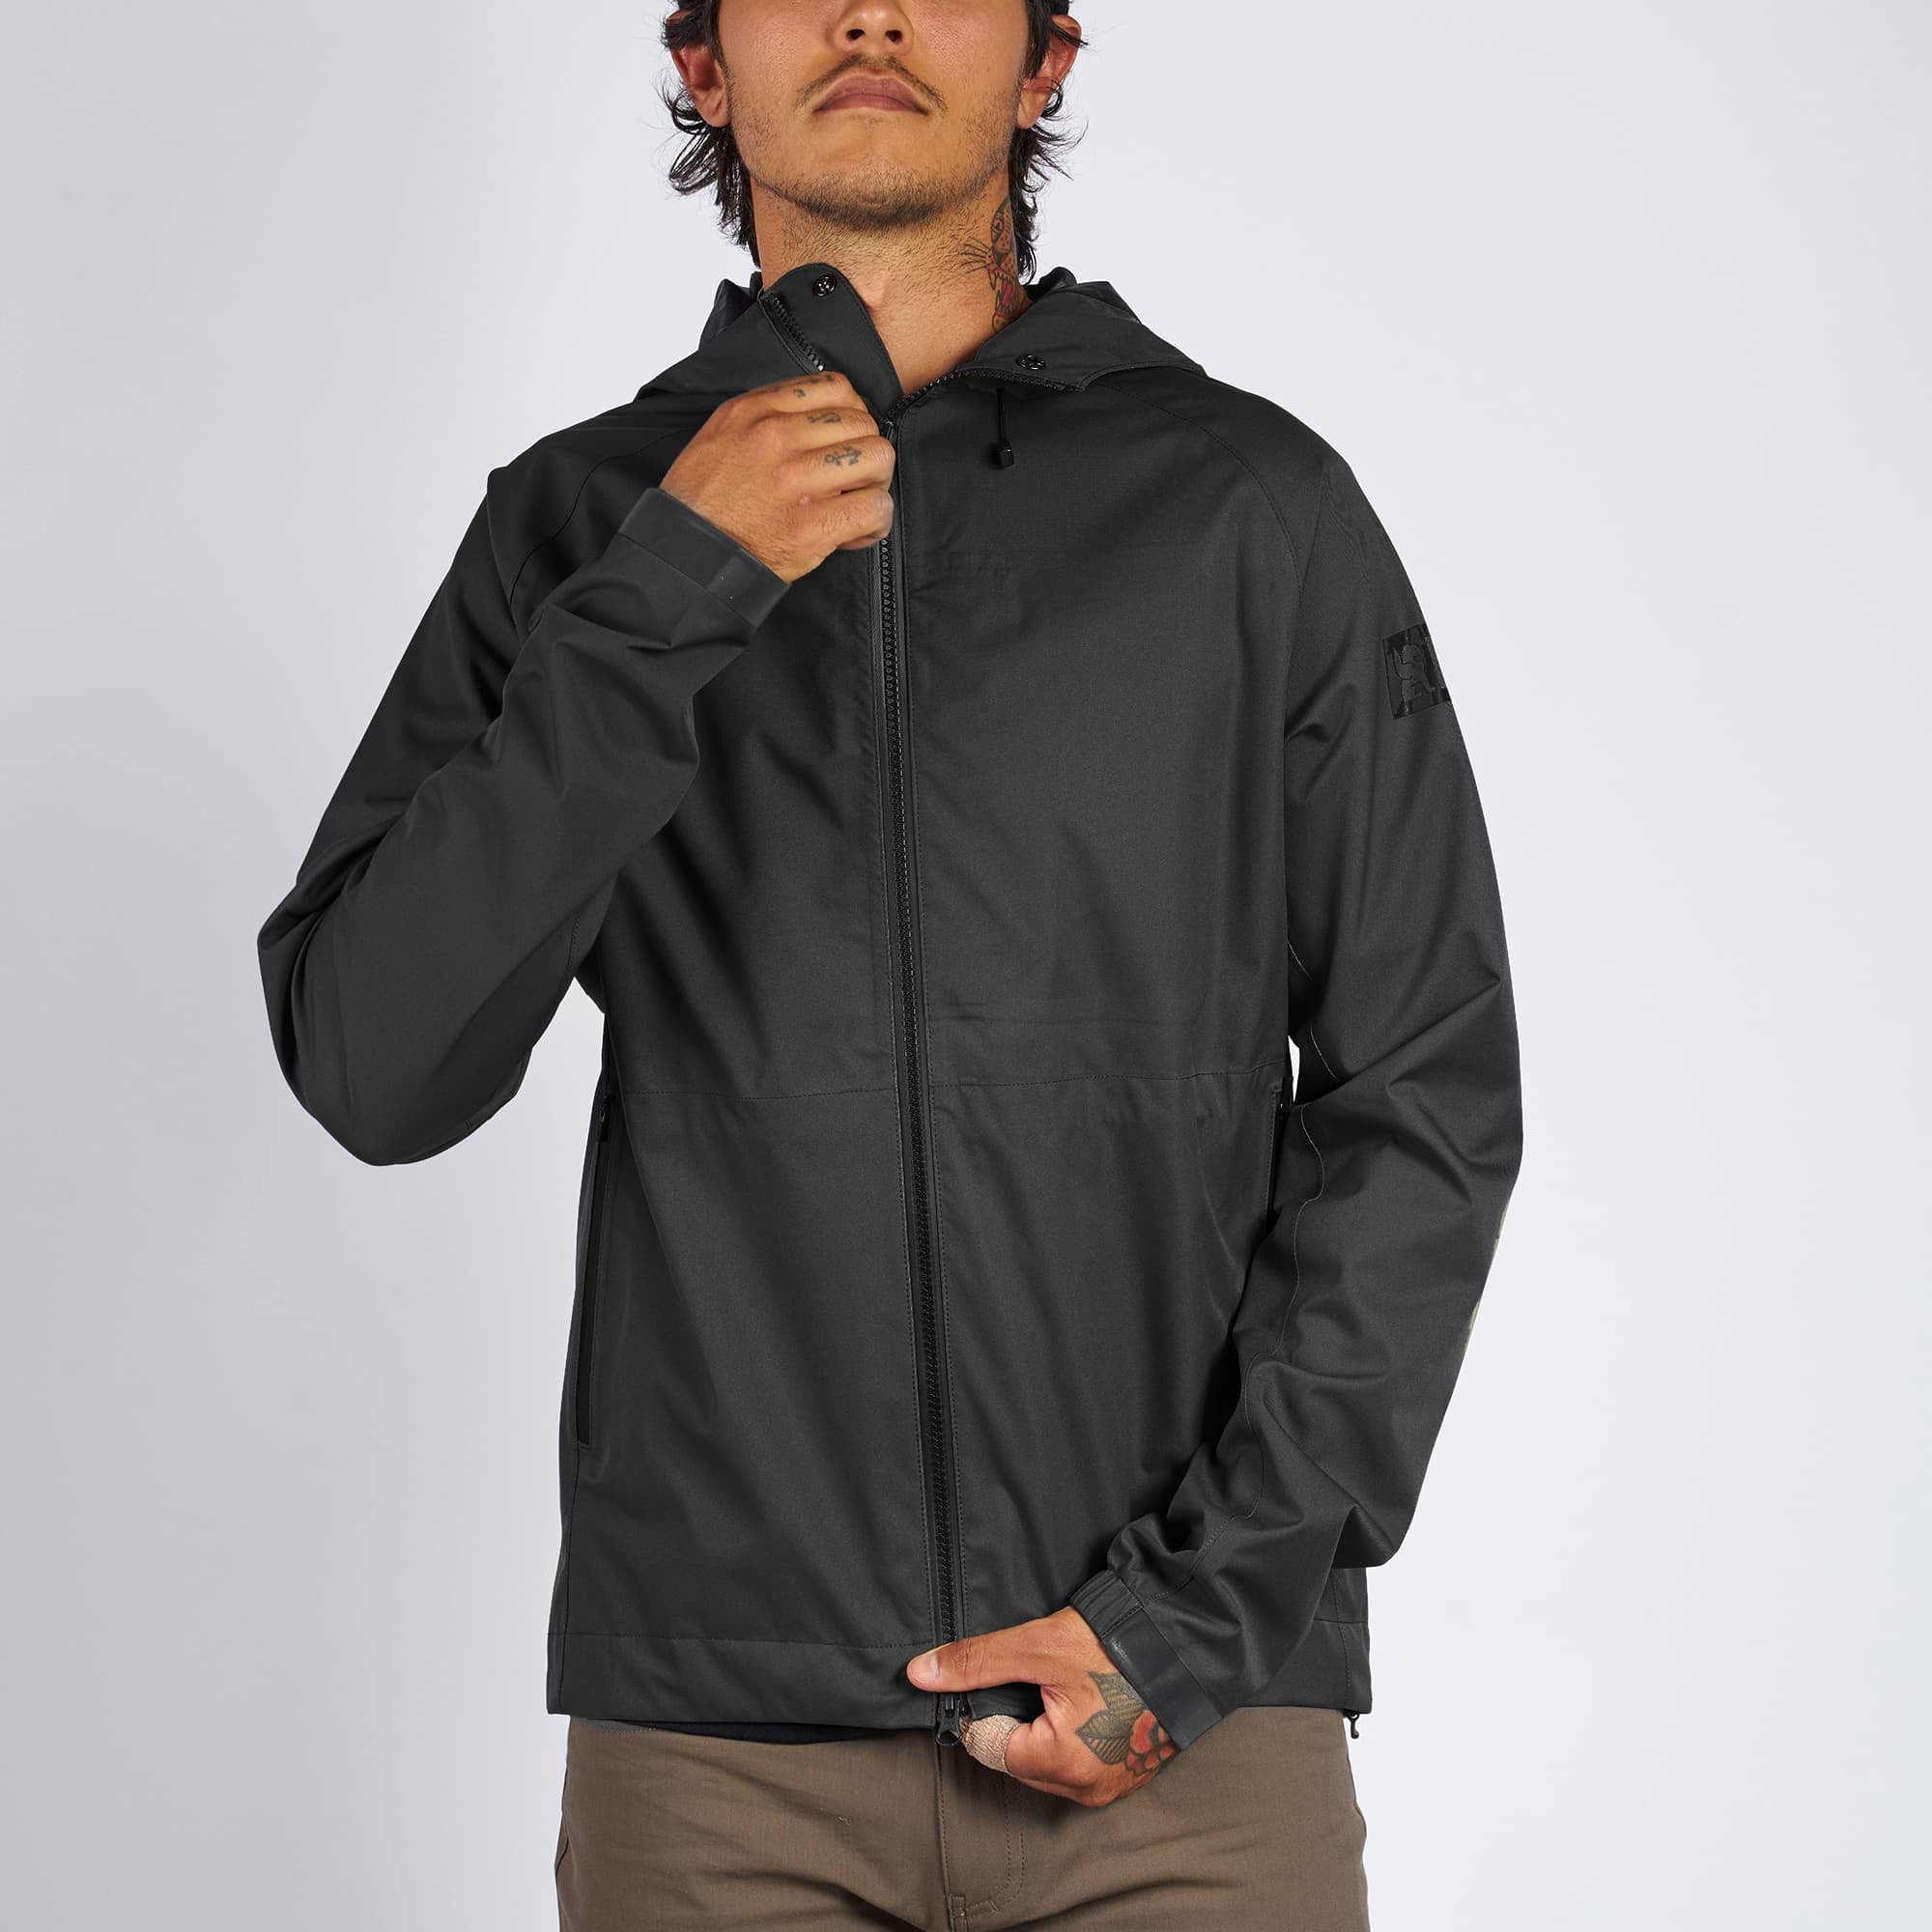 Waterproof rain jacket in black worn by a man front zip detail